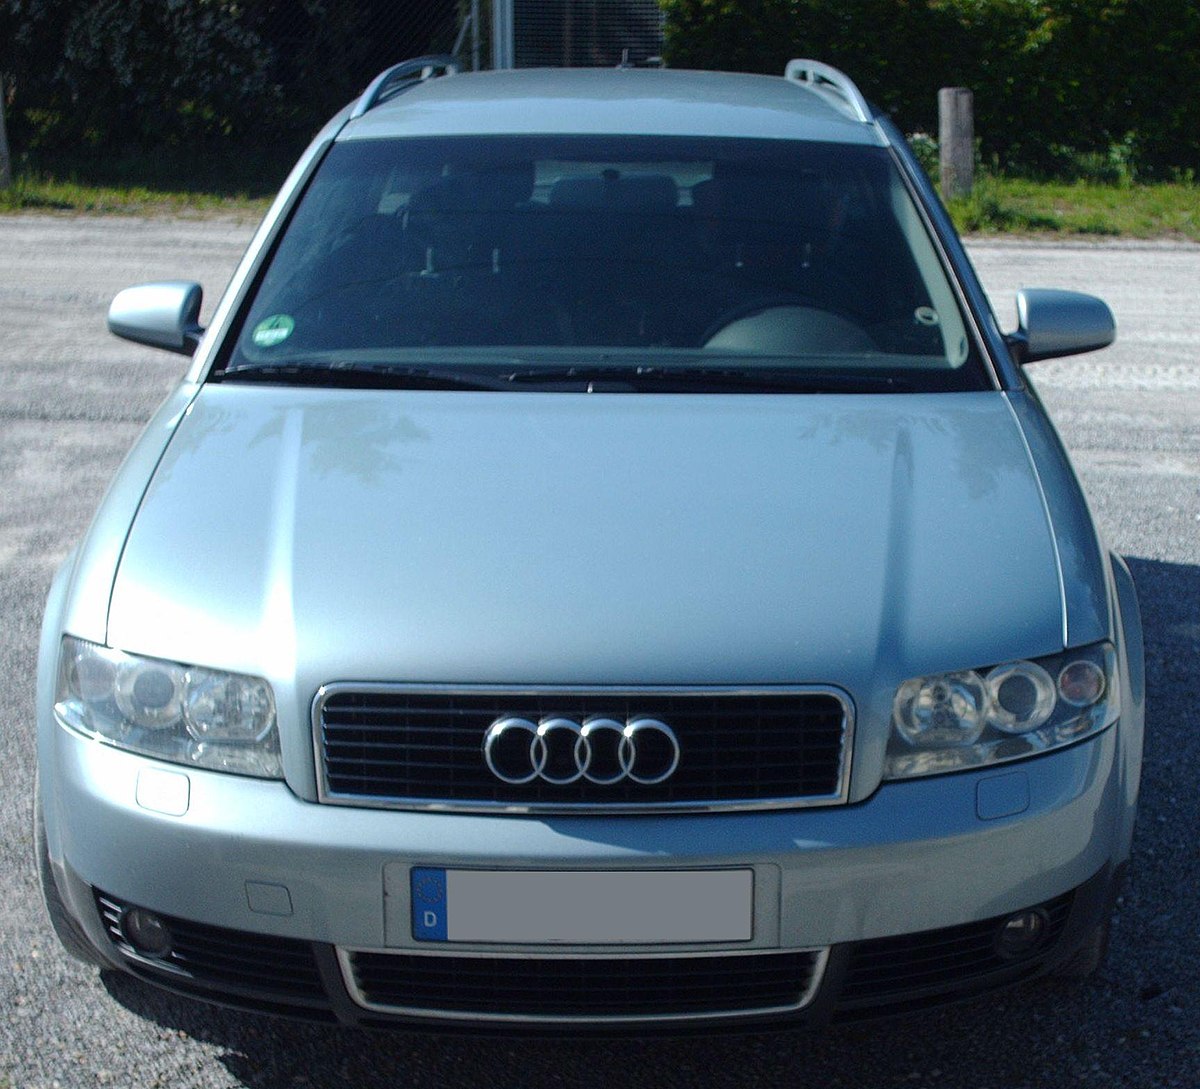 File:Audi A4 B6.JPG - Wikimedia Commons